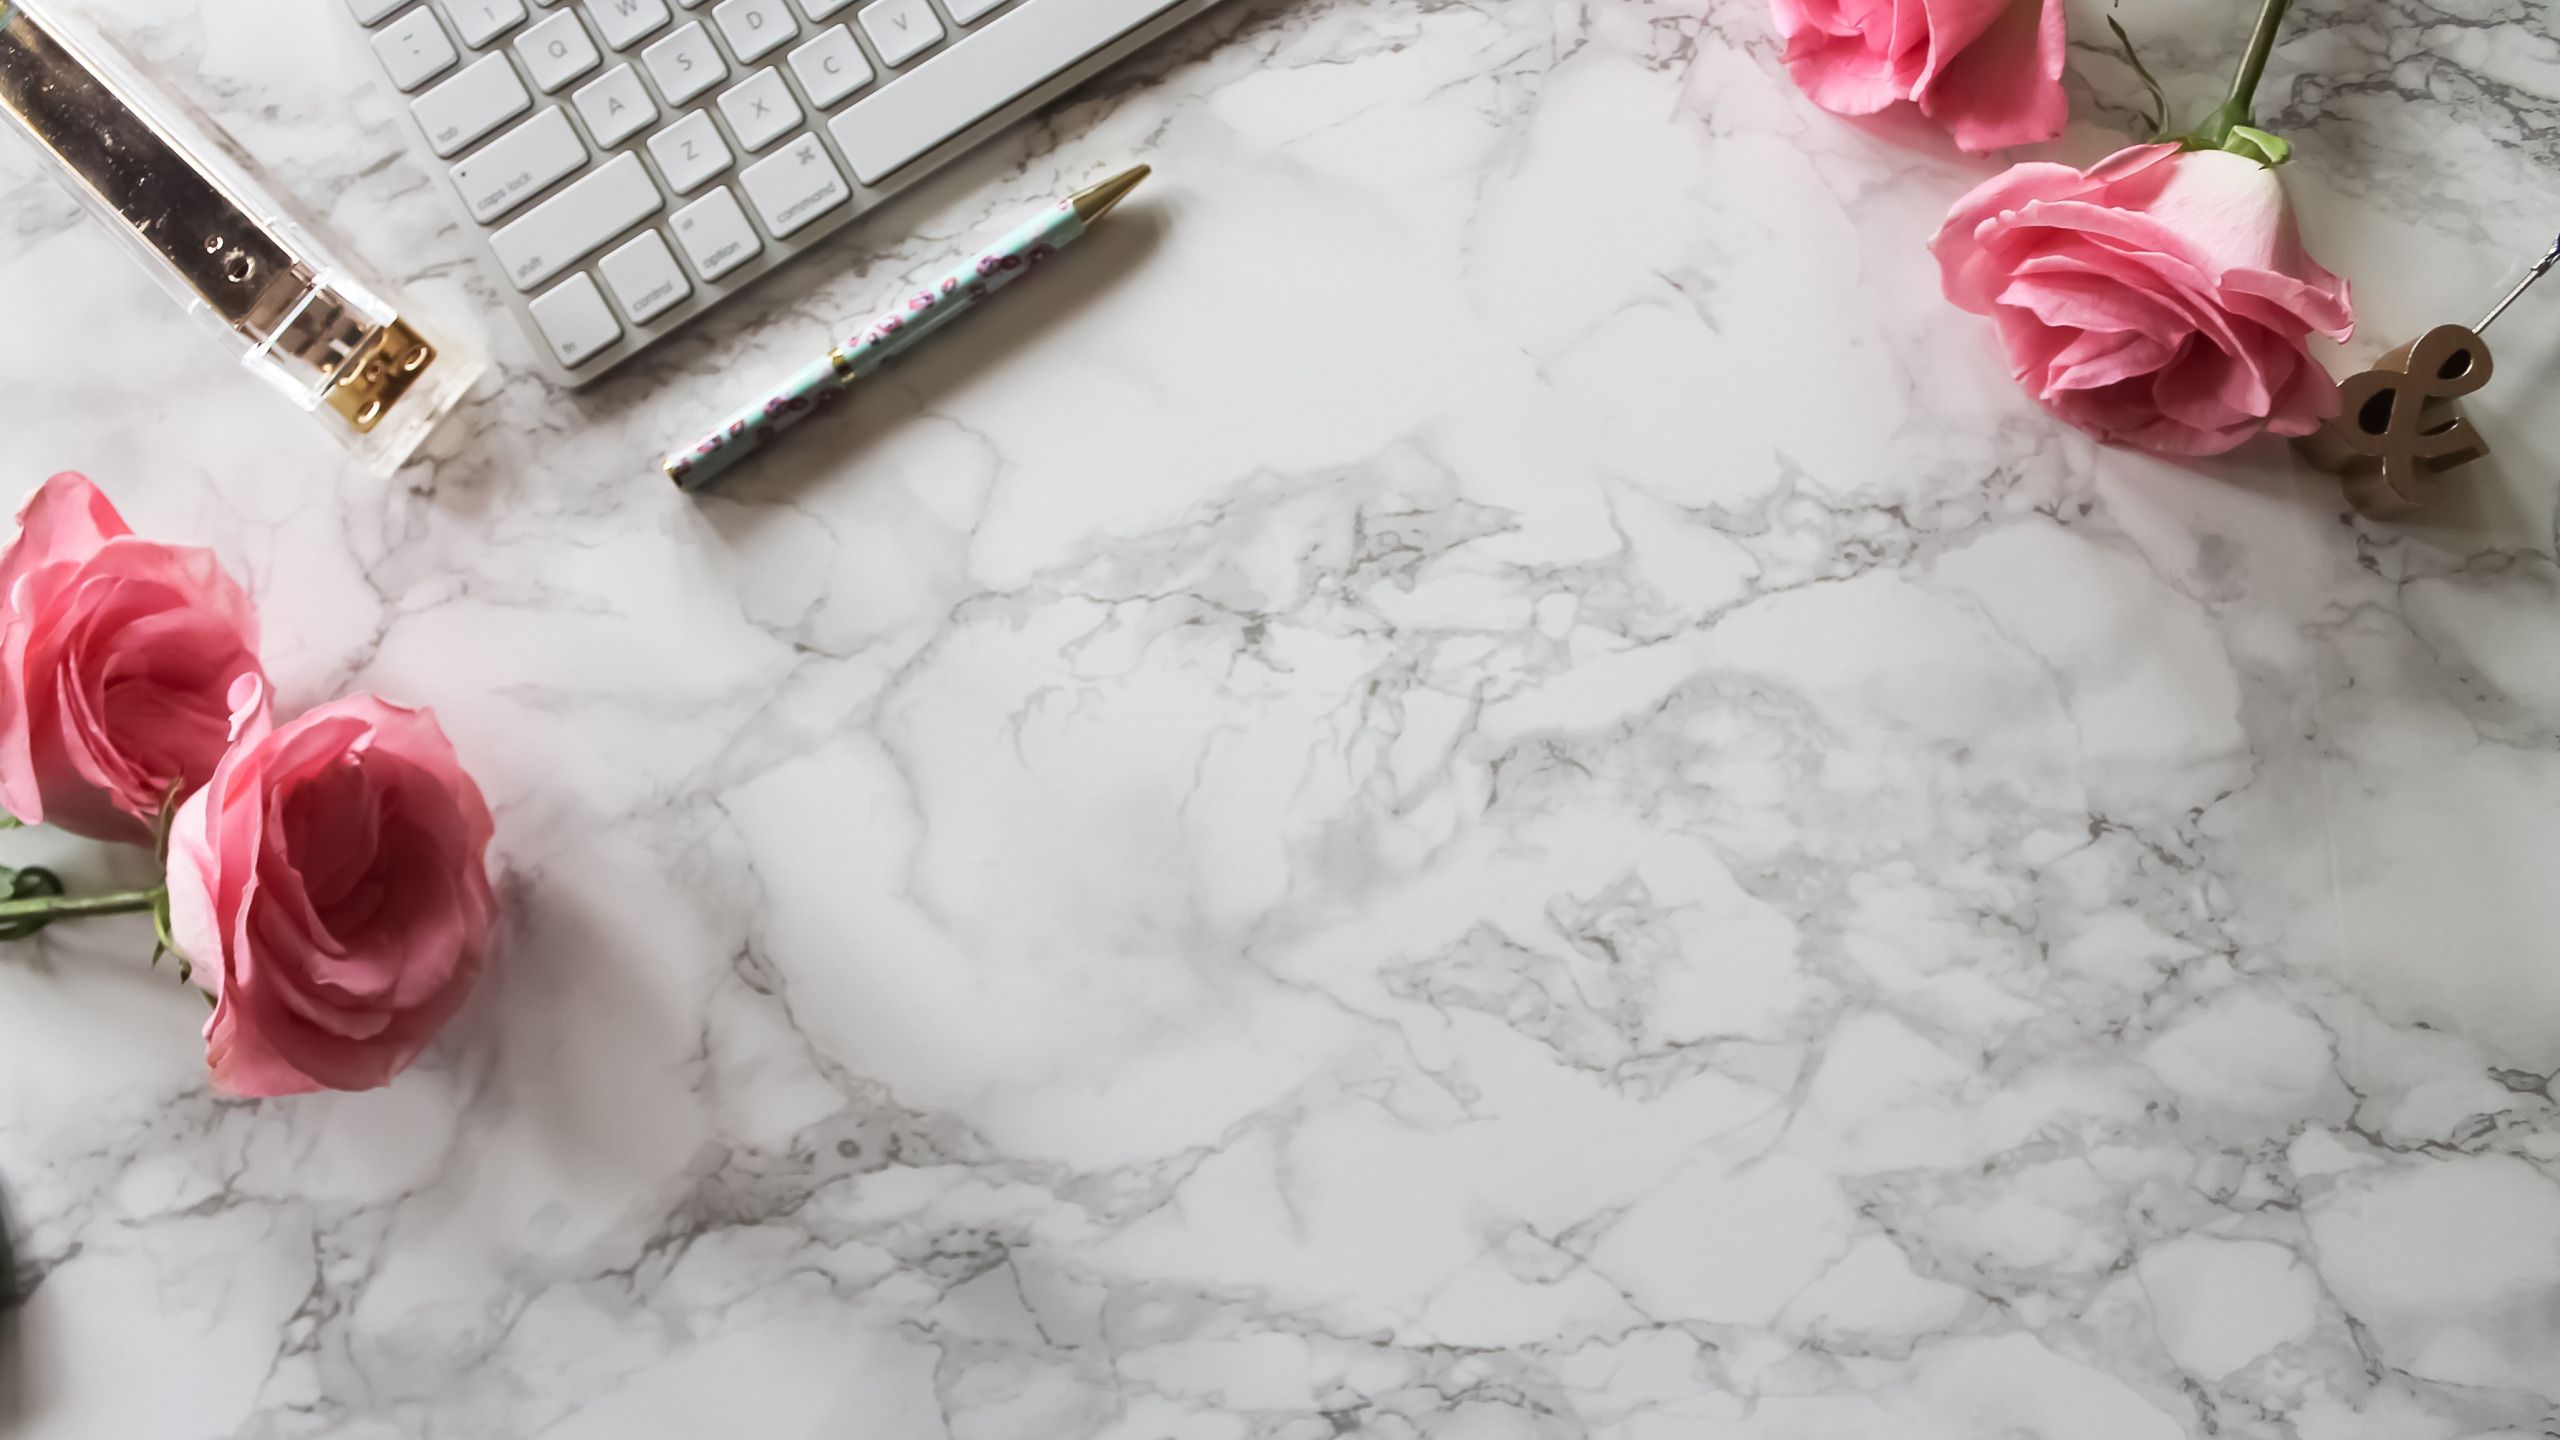 Download wallpaper roses, handle, pink, flowers, roses, keyboard